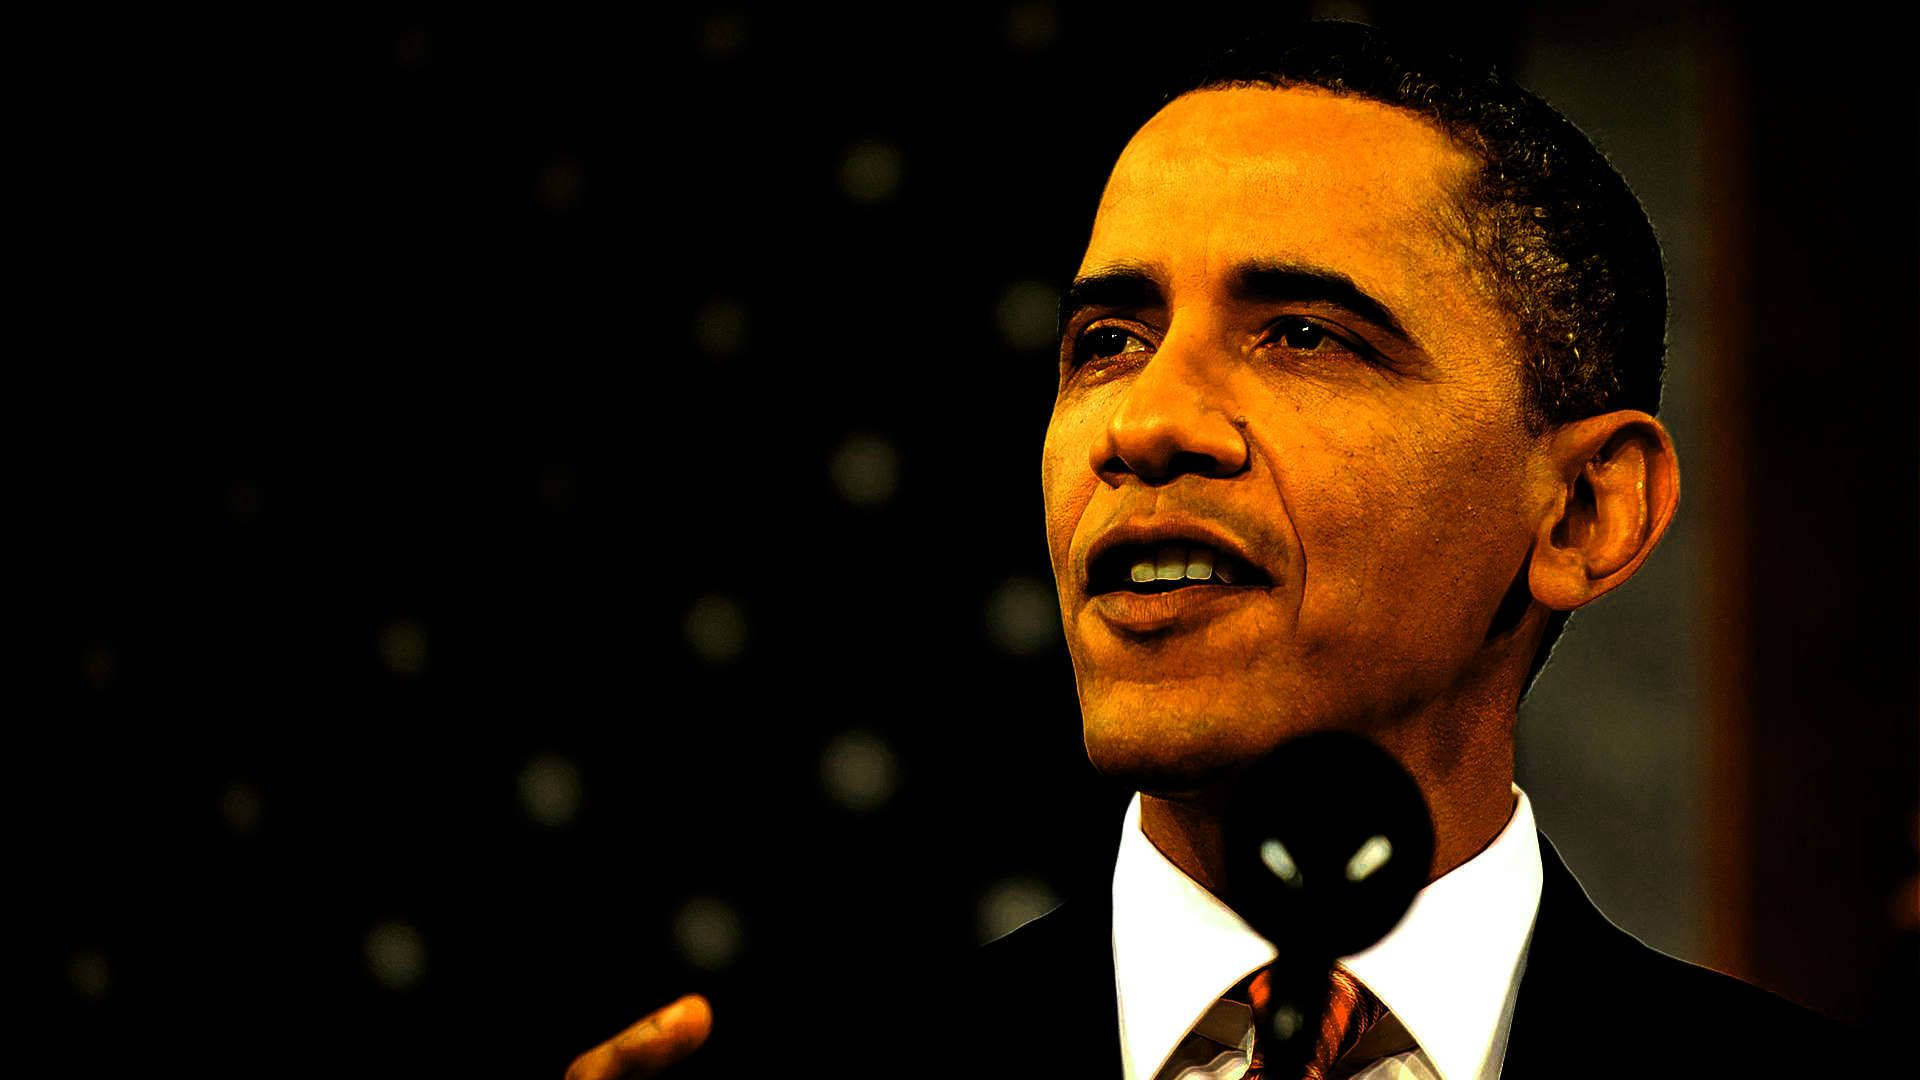 Barack Obama Sepia Portrait